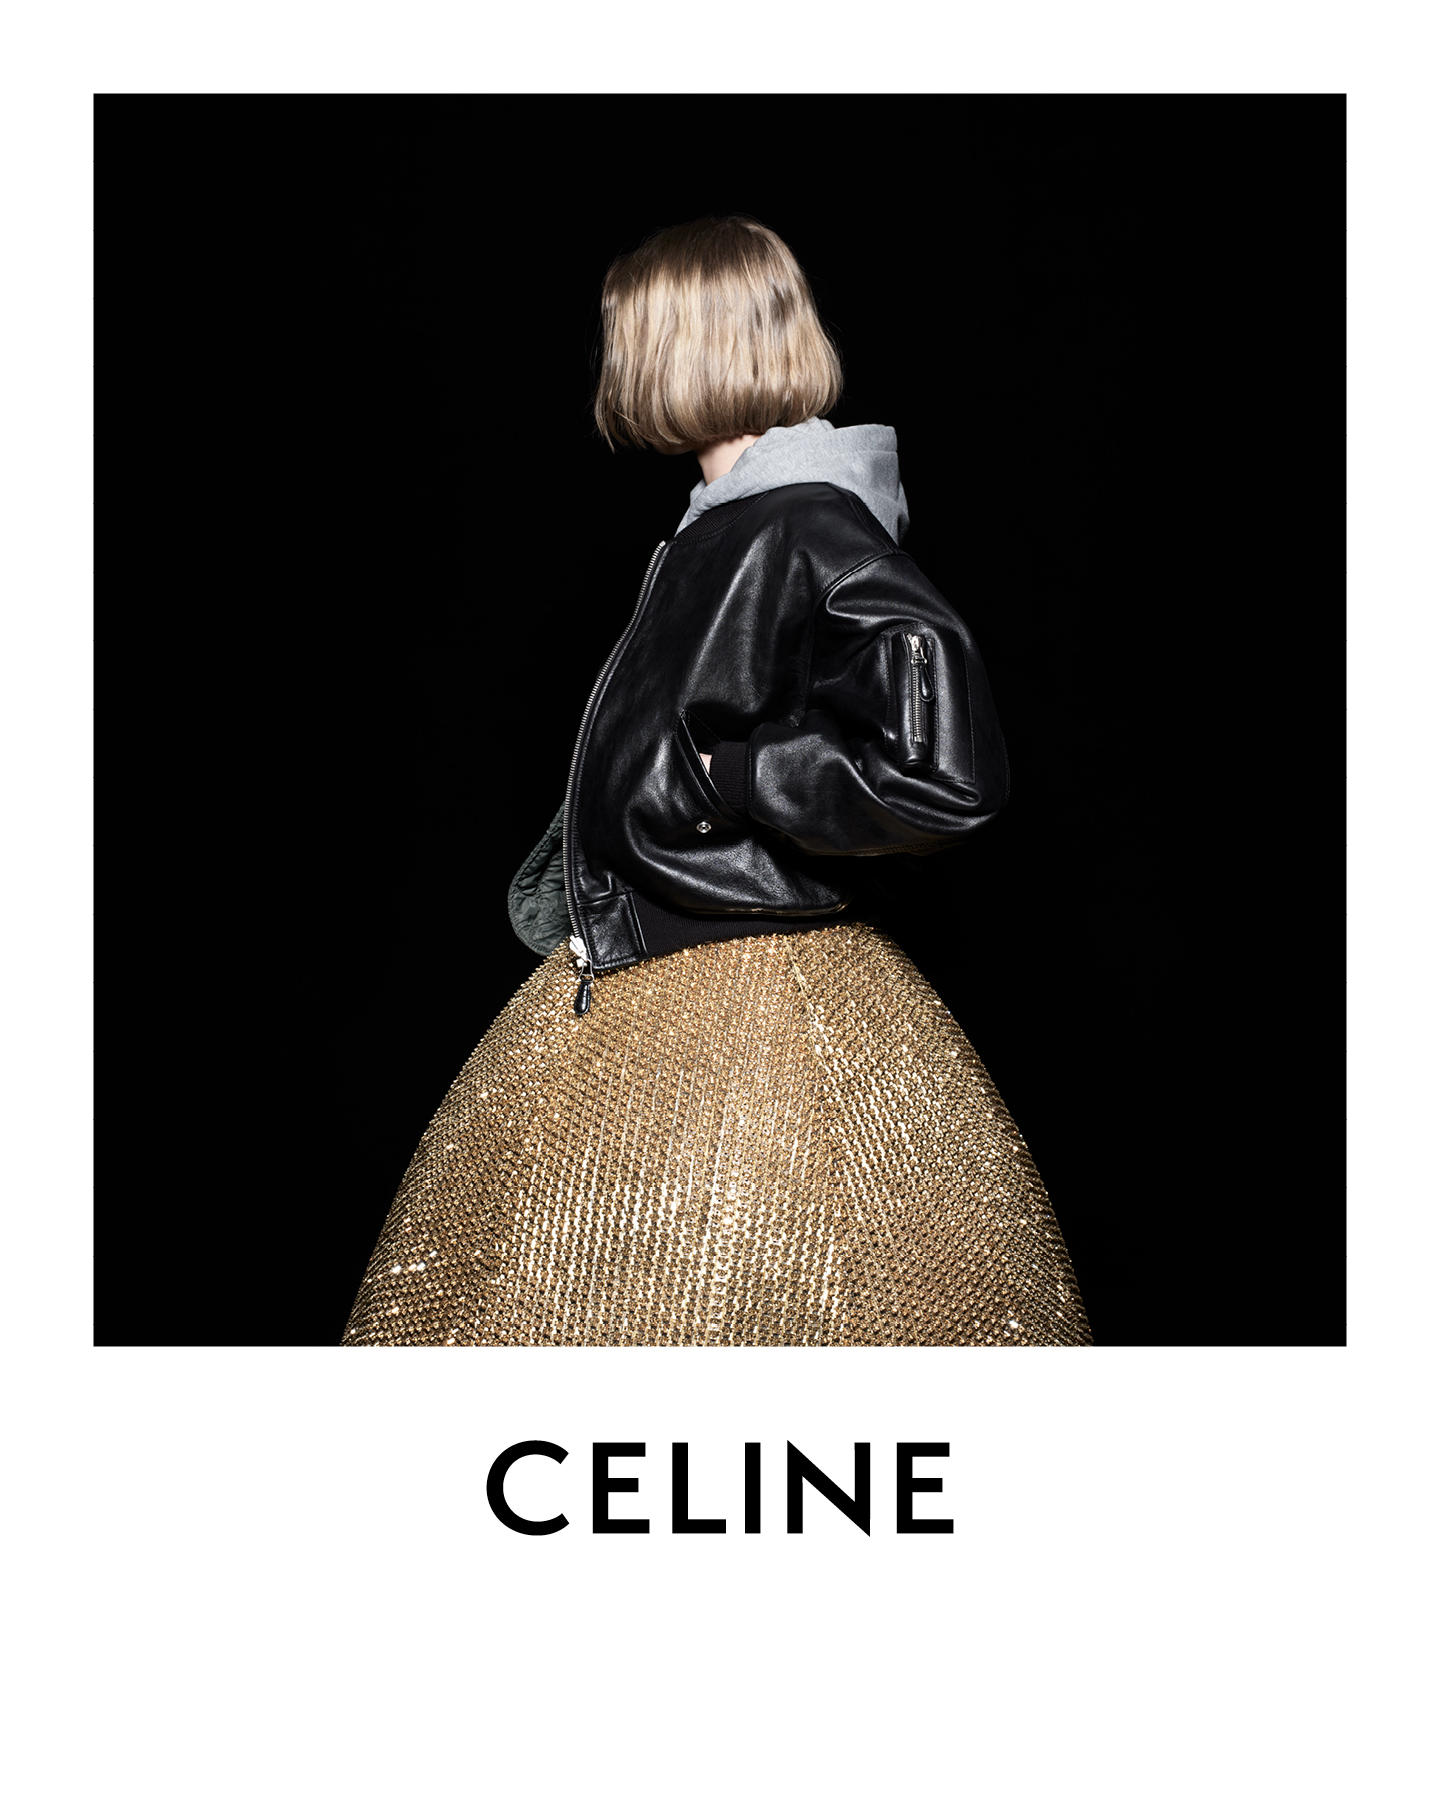 Kaia Gerber's CÉLINE Winter 2022 Campaign, by Hedi Slimane — Anne